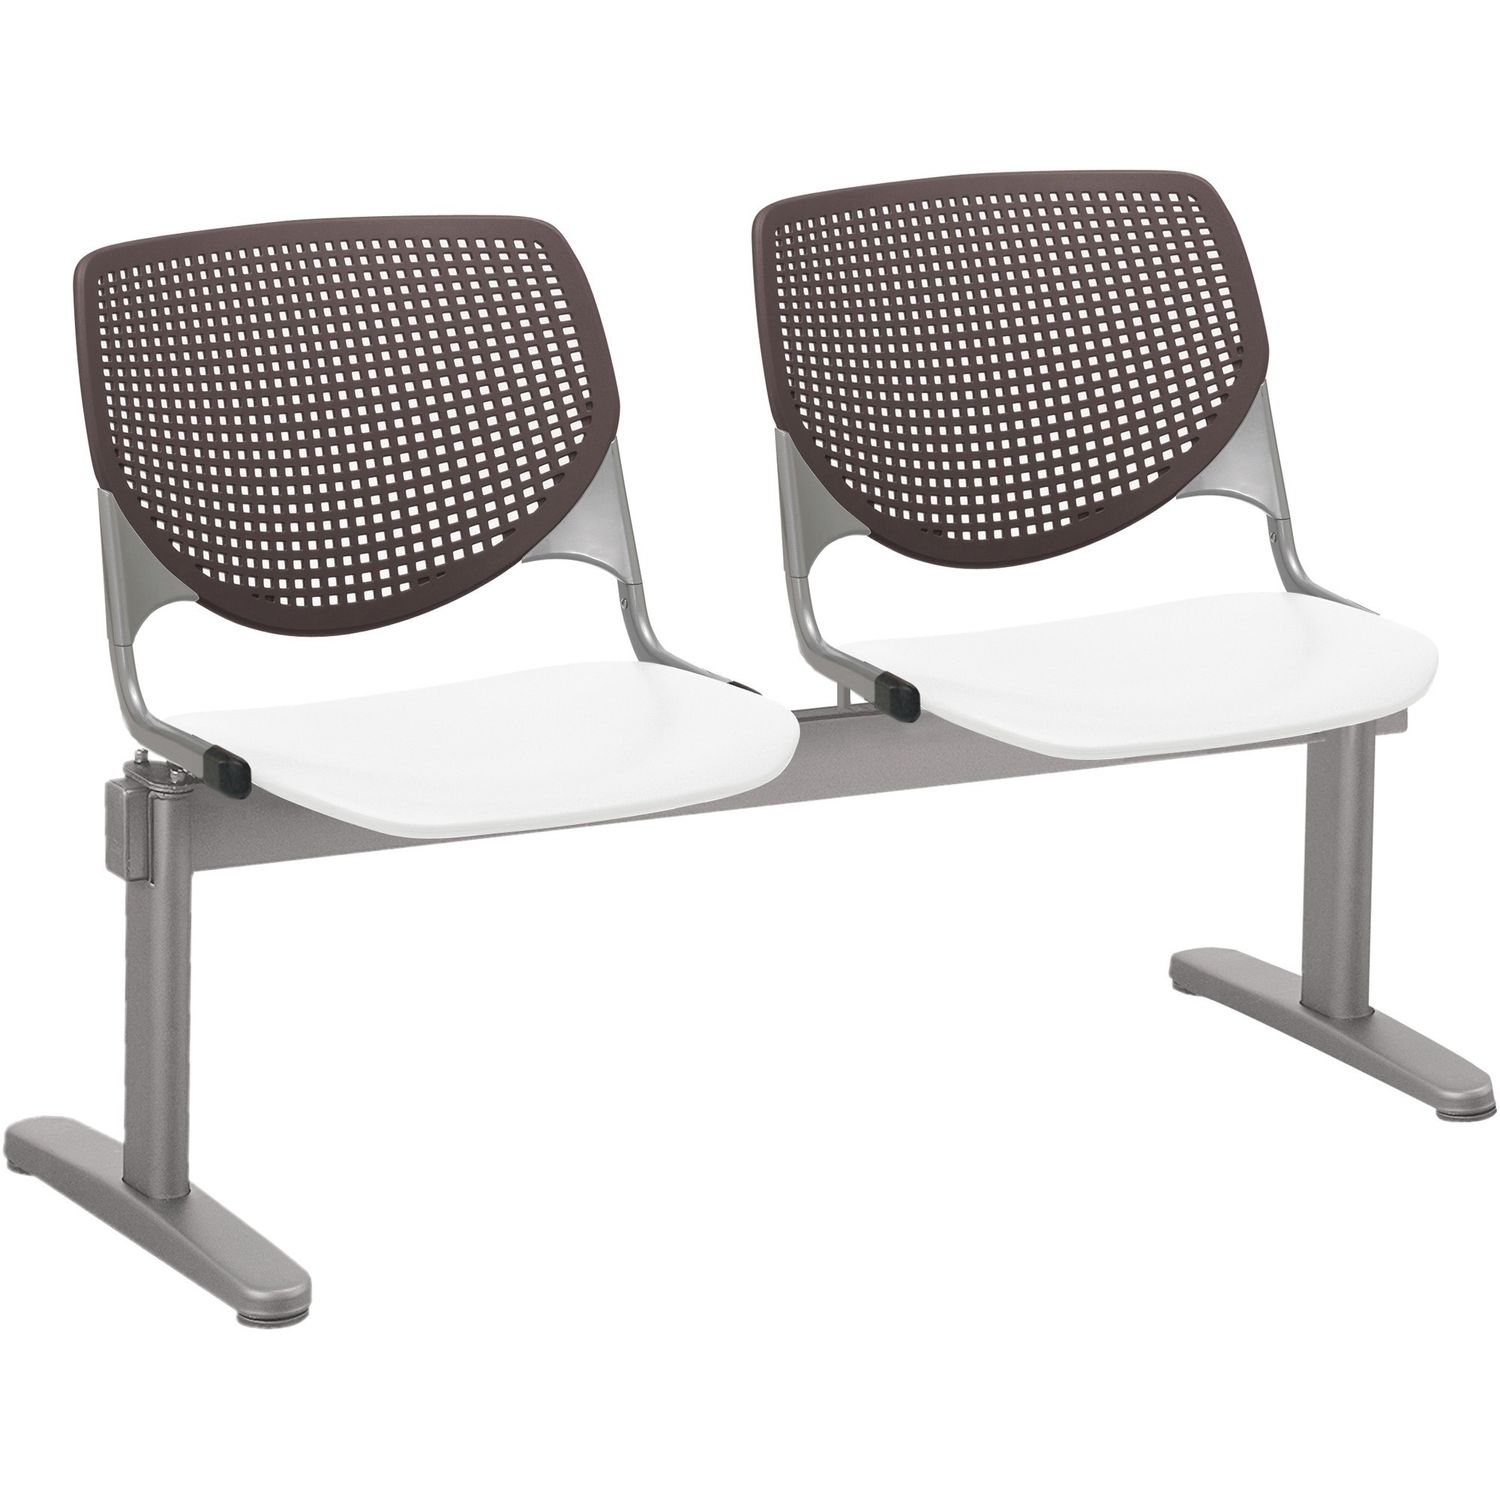 Kool 2 Seat Beam Chair White Polypropylene Seat, Brownstone Polypropylene, Aluminum Alloy Back, Powder Coated Silver Tubular Steel Frame, 1 Each